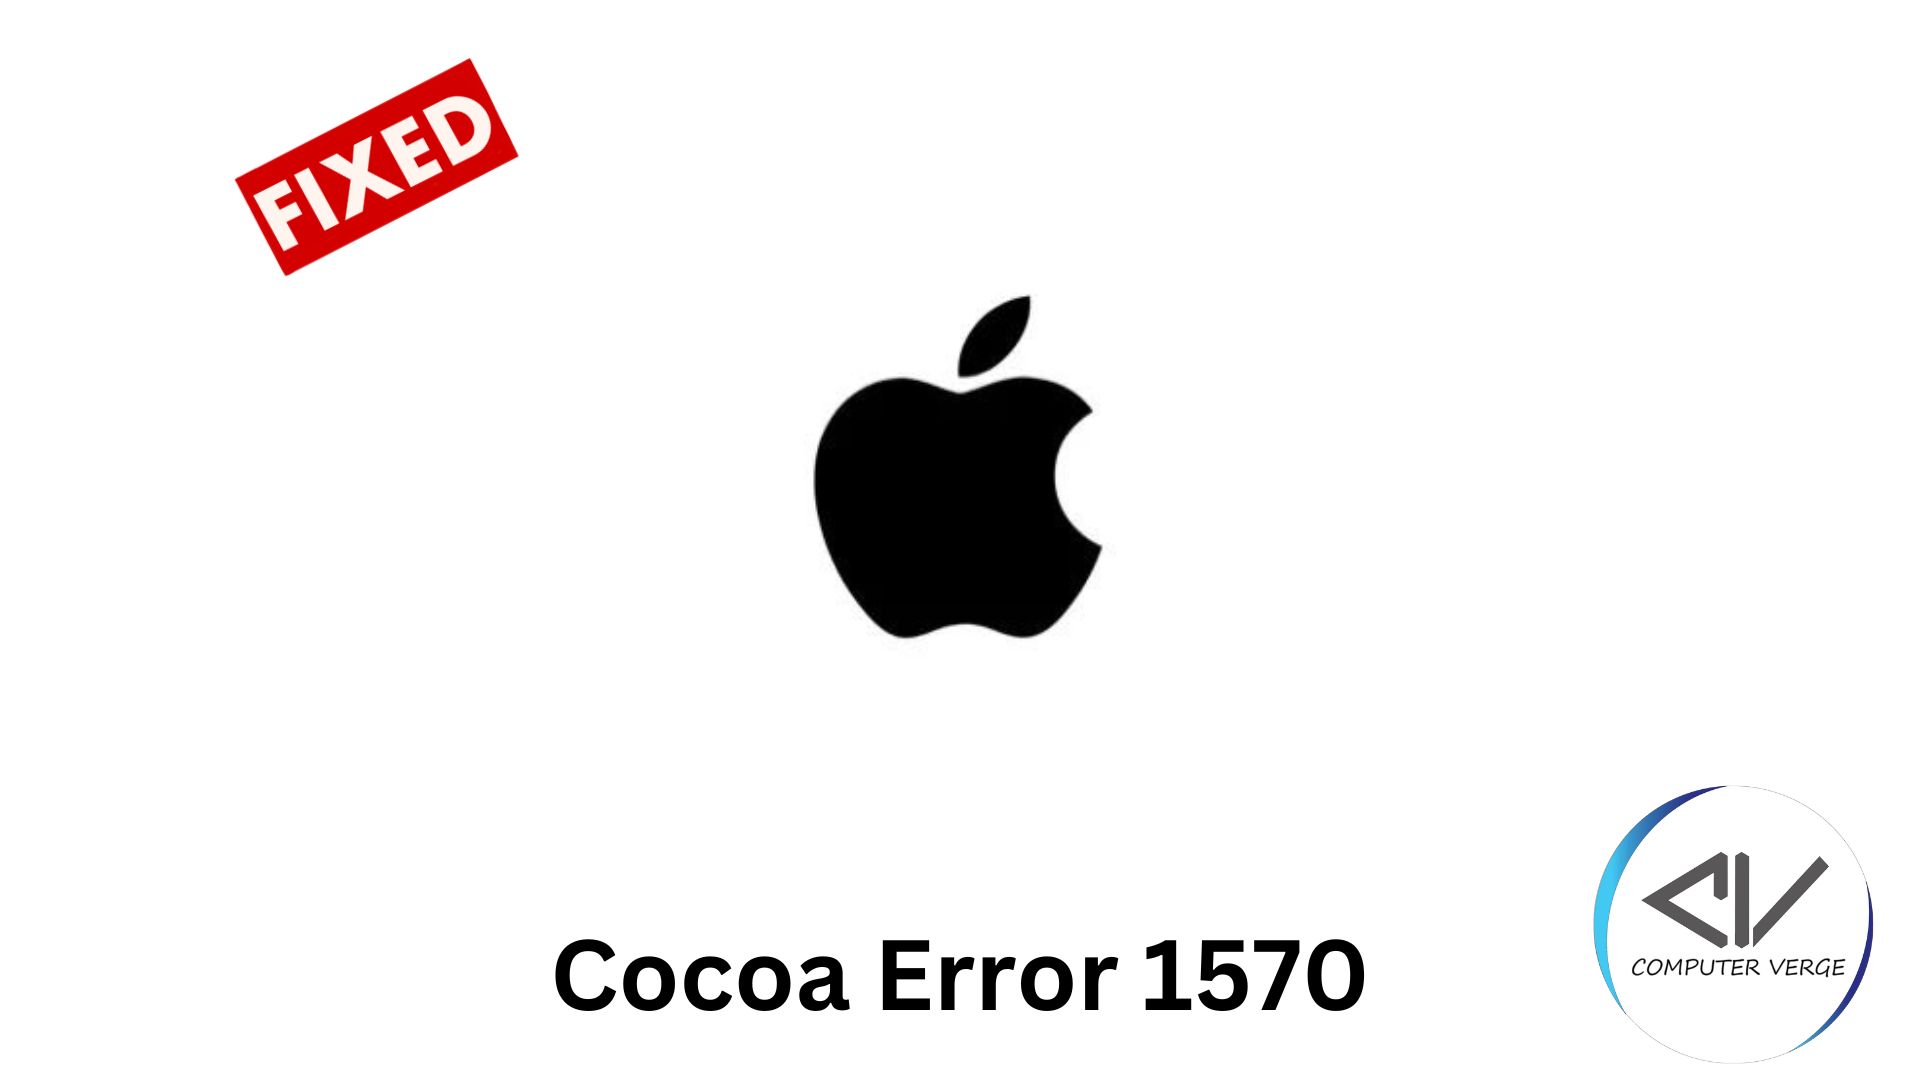 The file-related cocoa error 1570